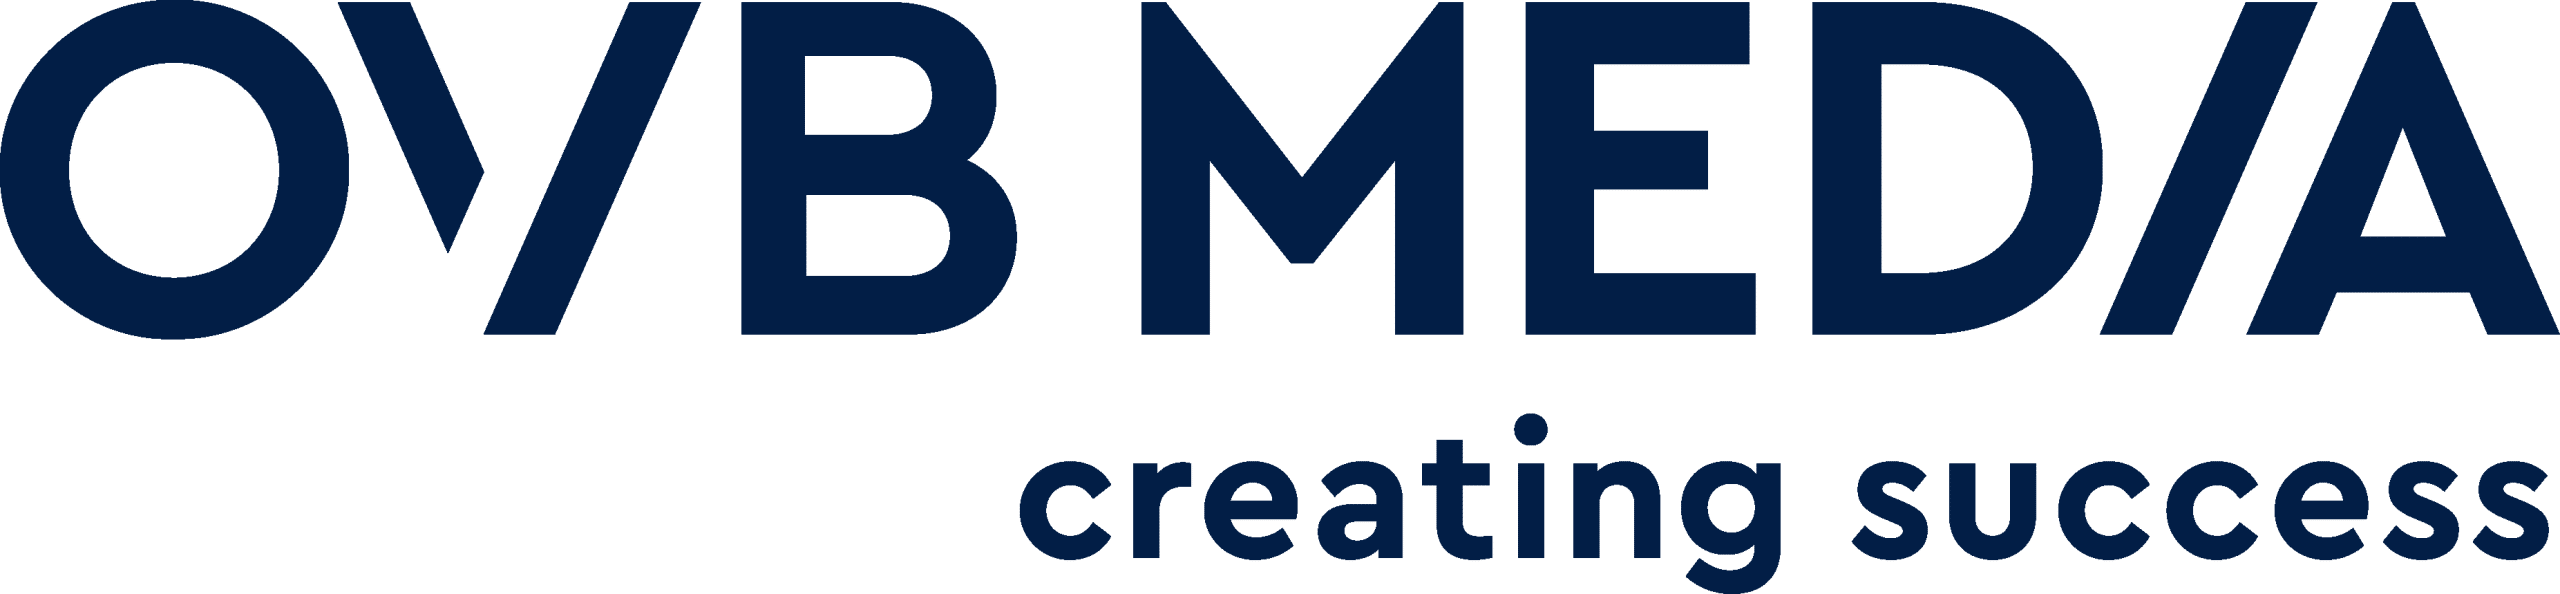 ovbmedia logo claim - Alle Mitglieder